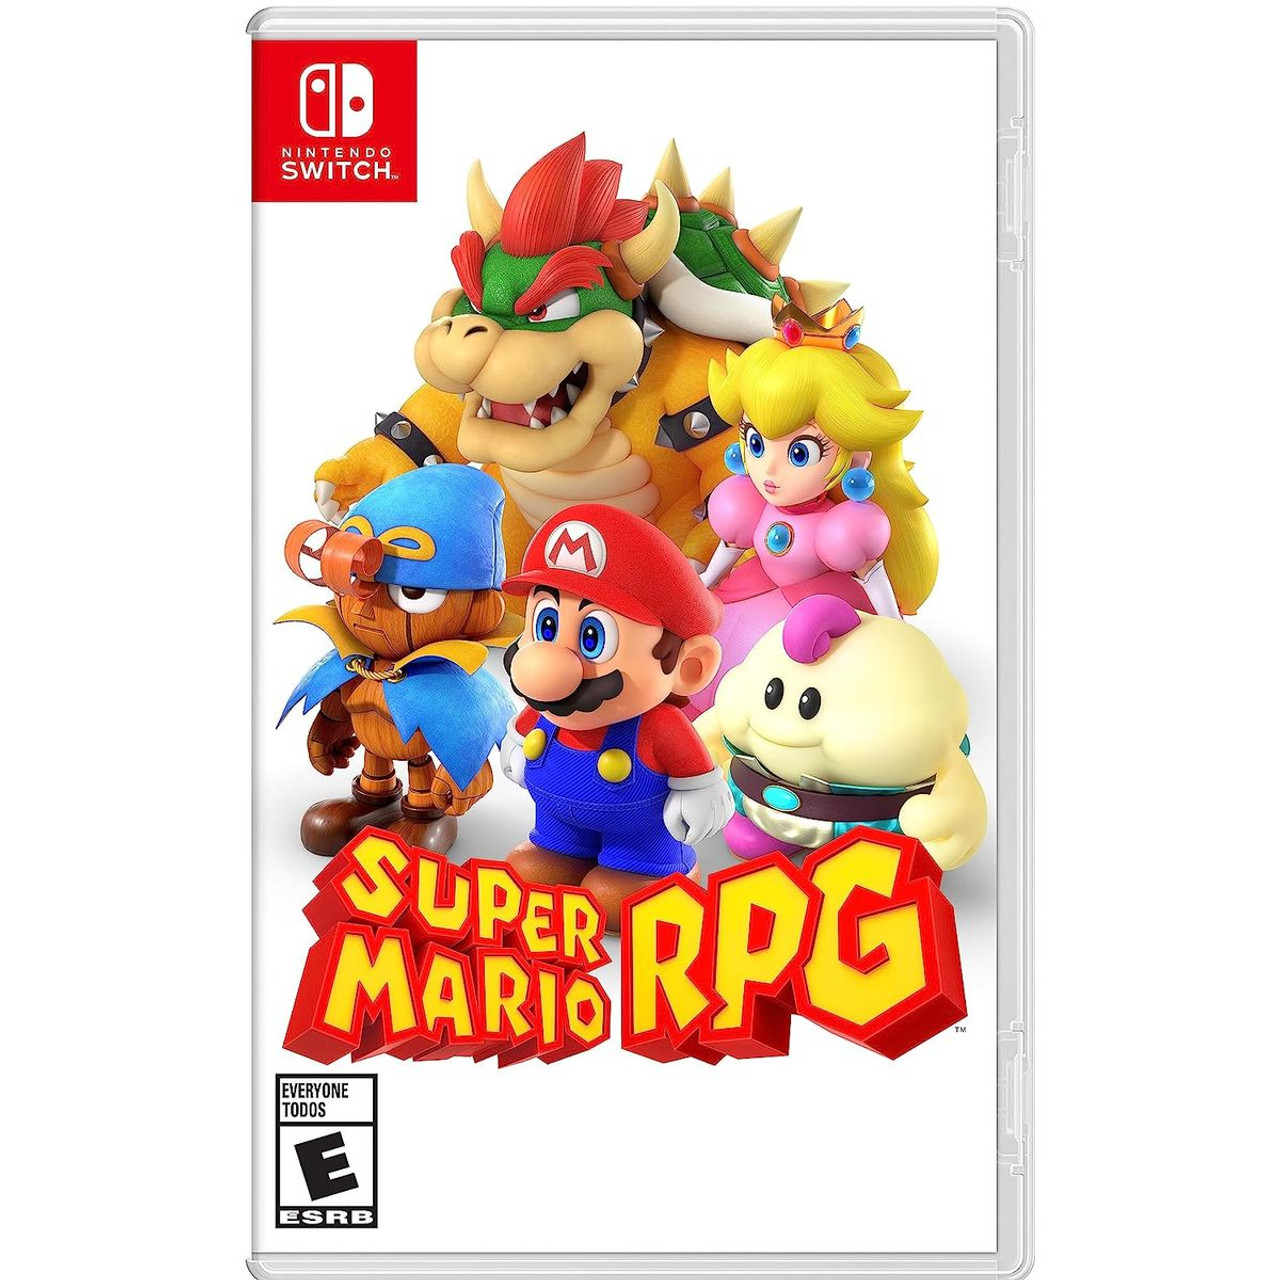 Super Mario RPG - Nintendo Switch (US Version) product image